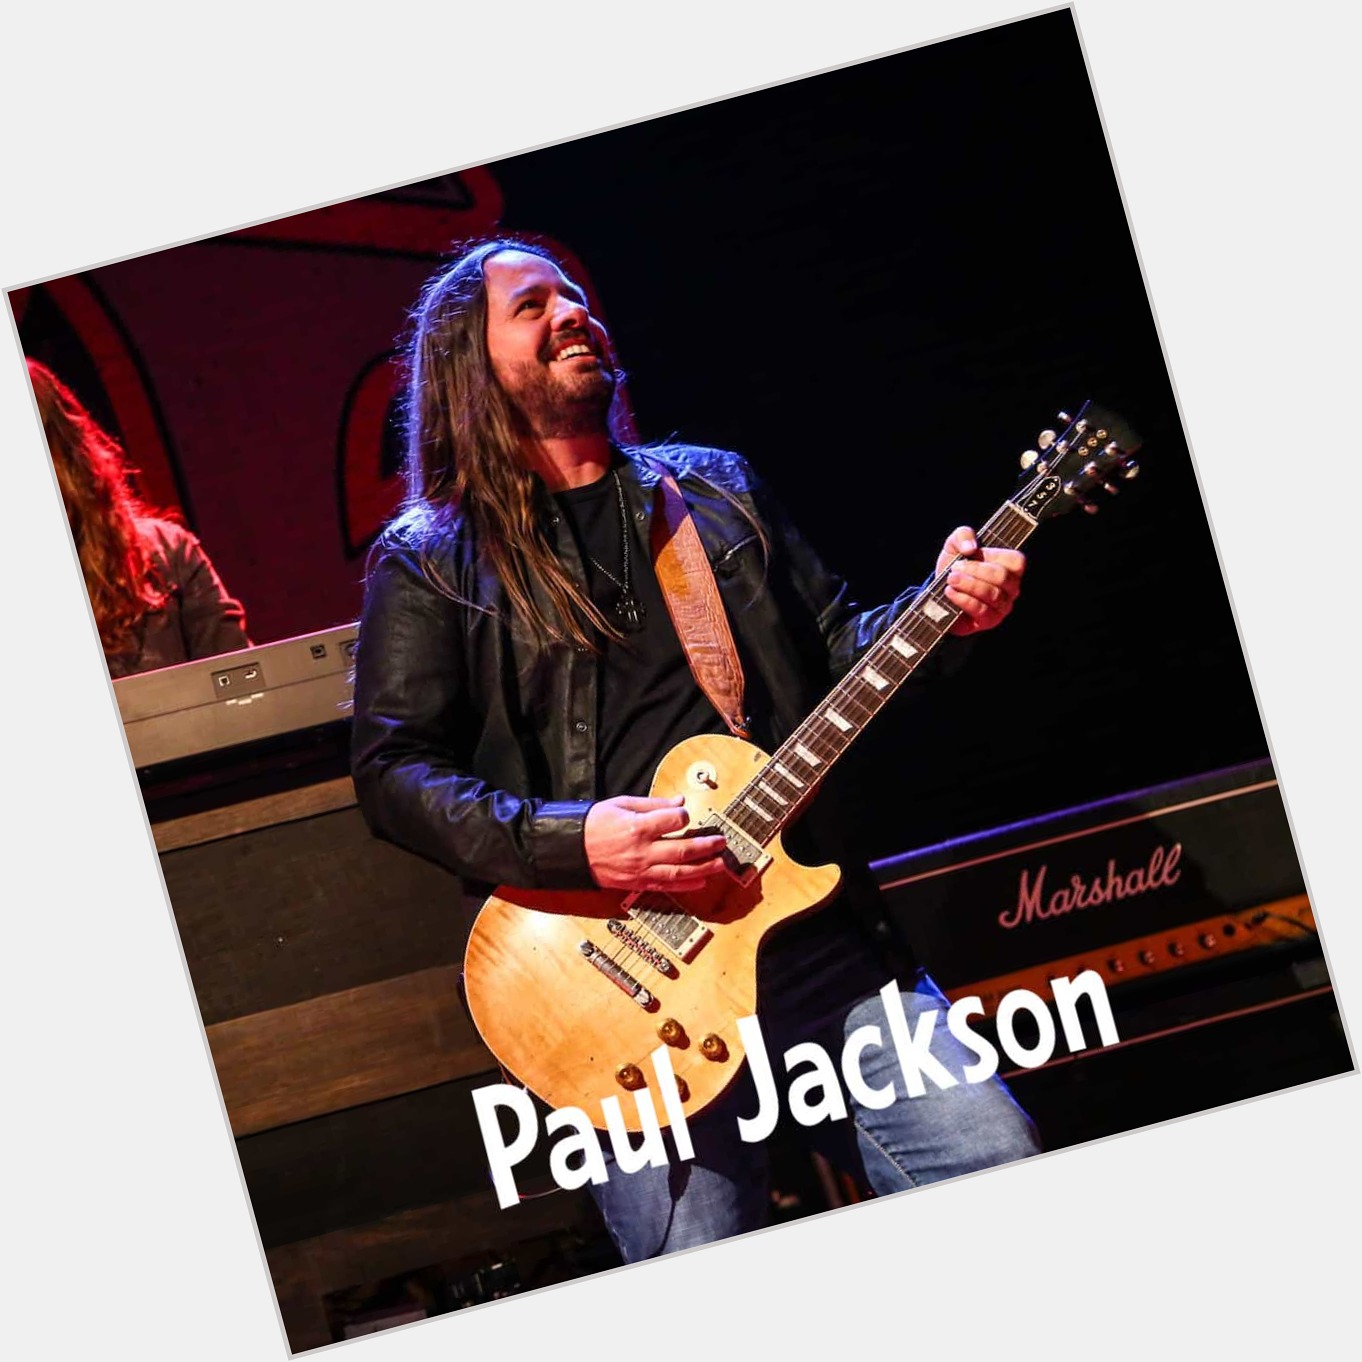 Paul Jackson  